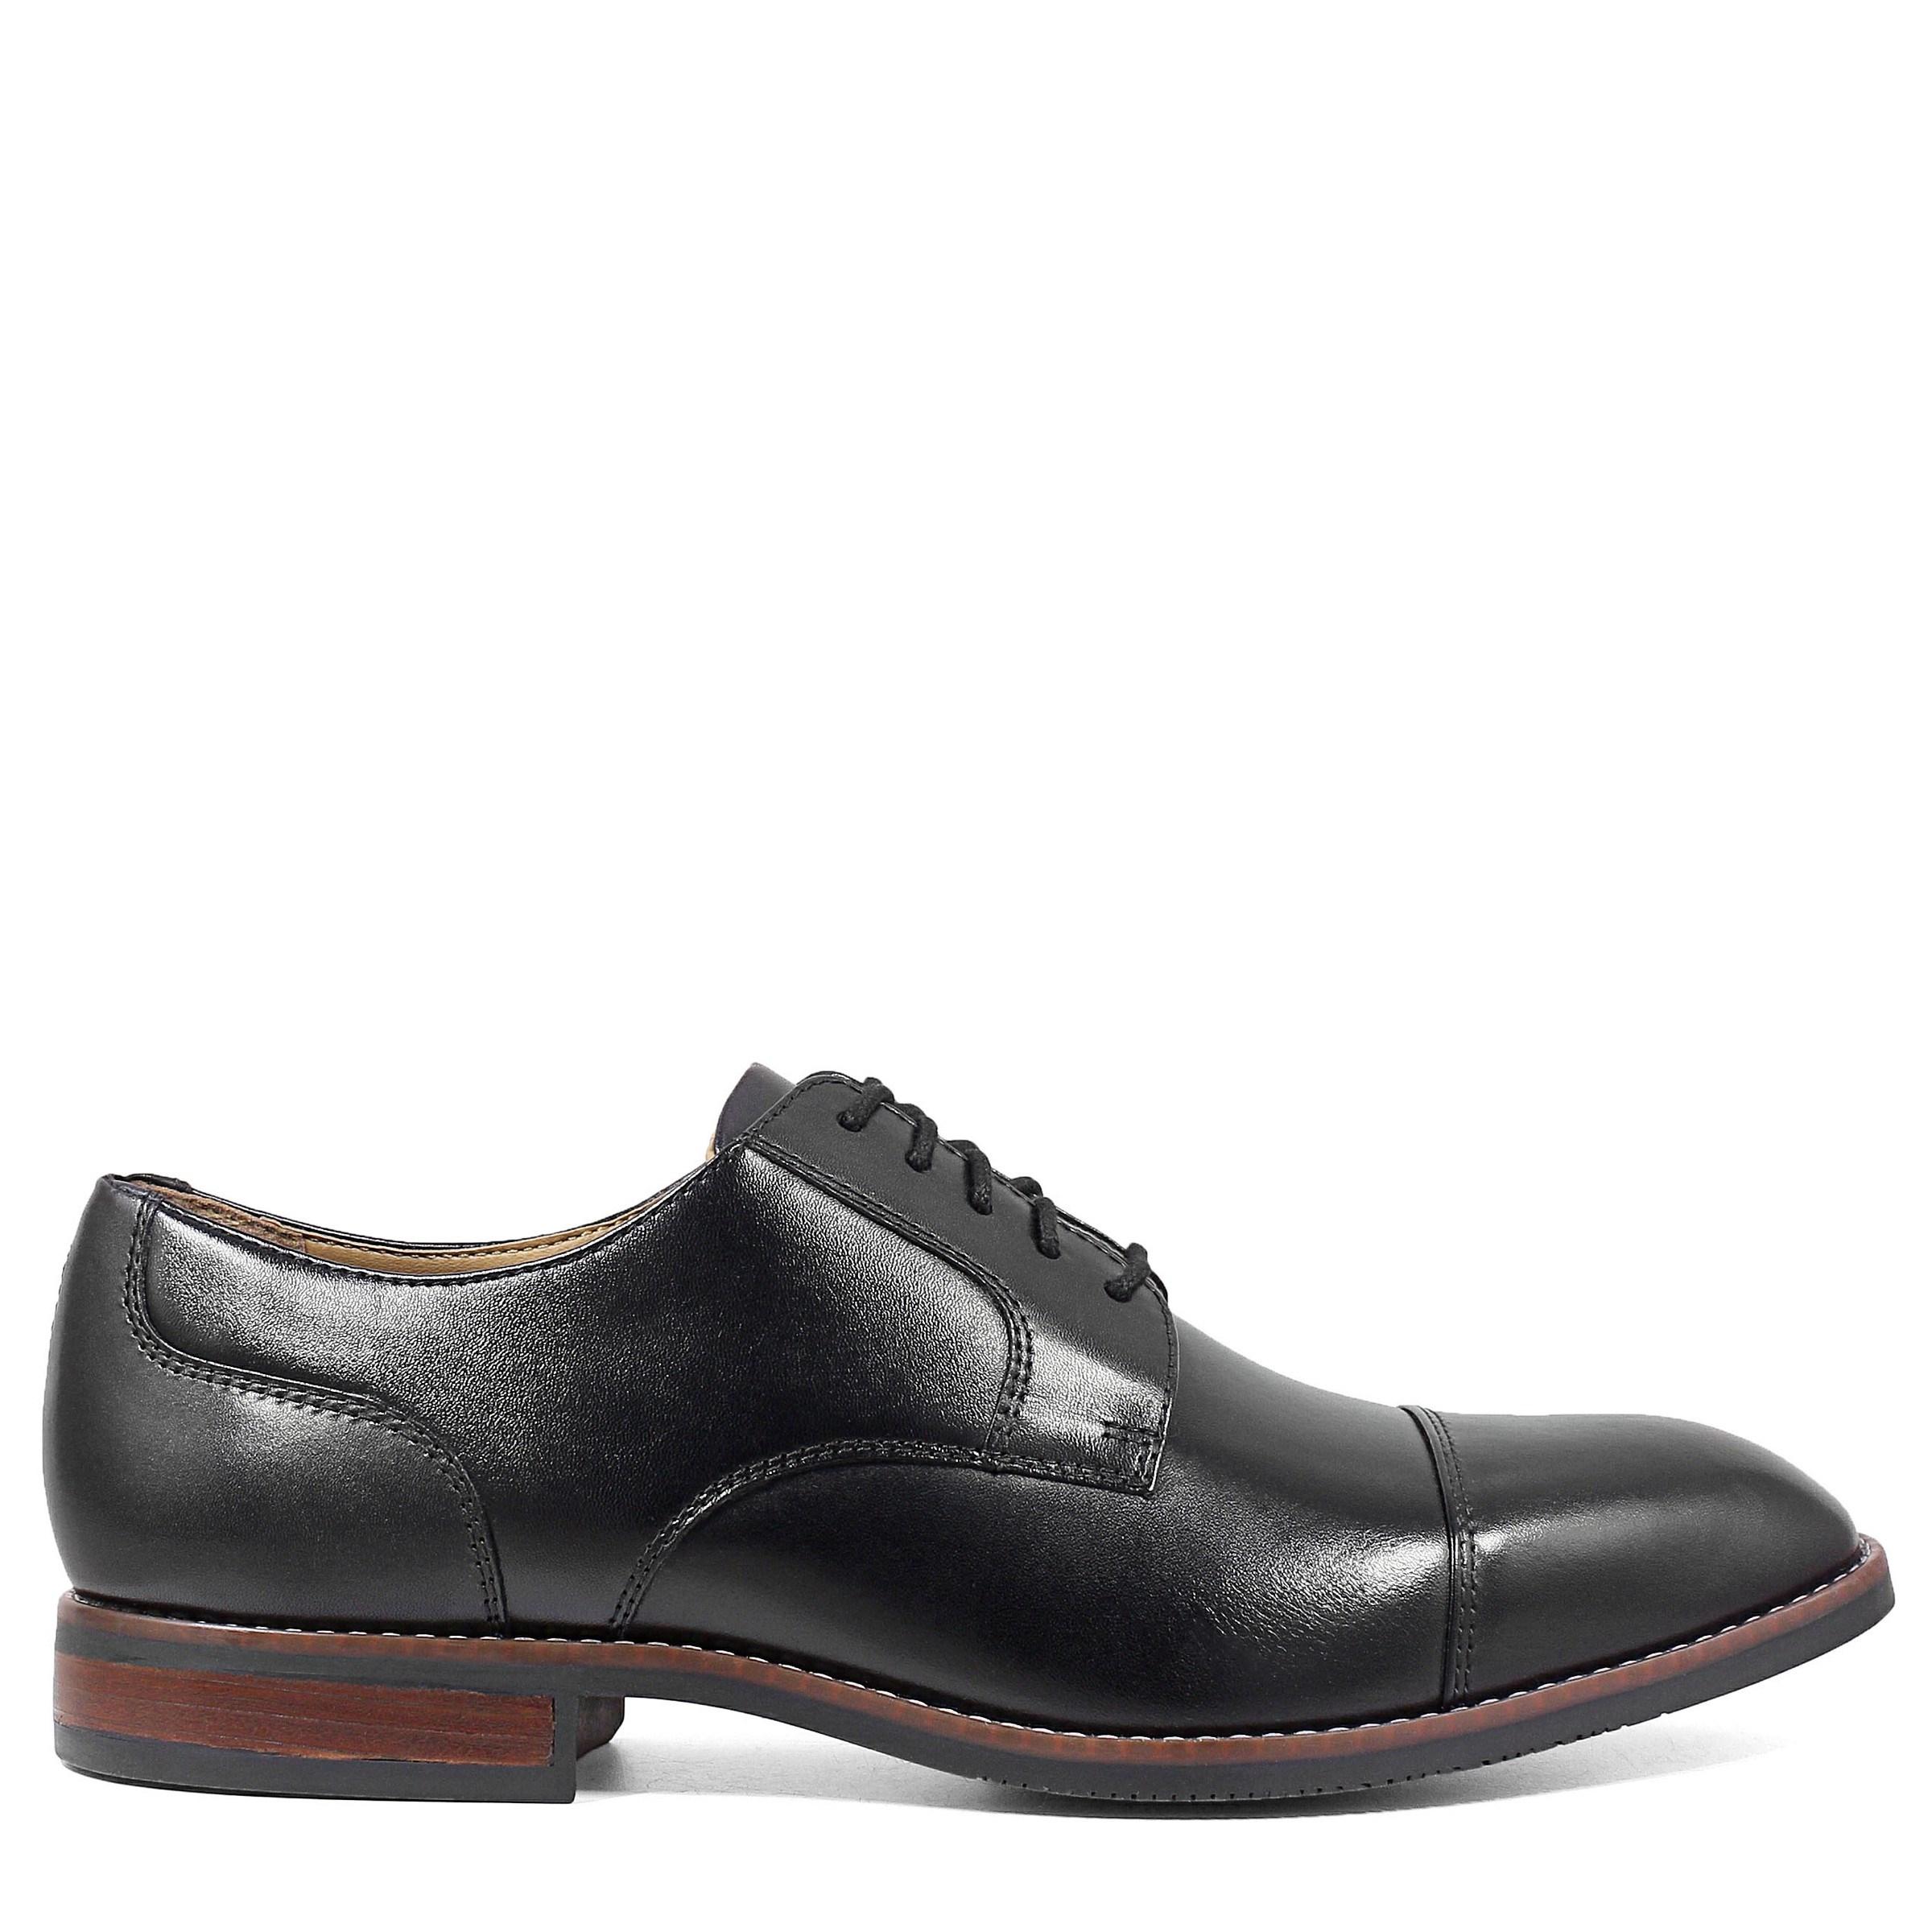 Nunn Bush Leather Fifth Ave Flex Medium/wide Cap Toe Oxford Shoes in ...